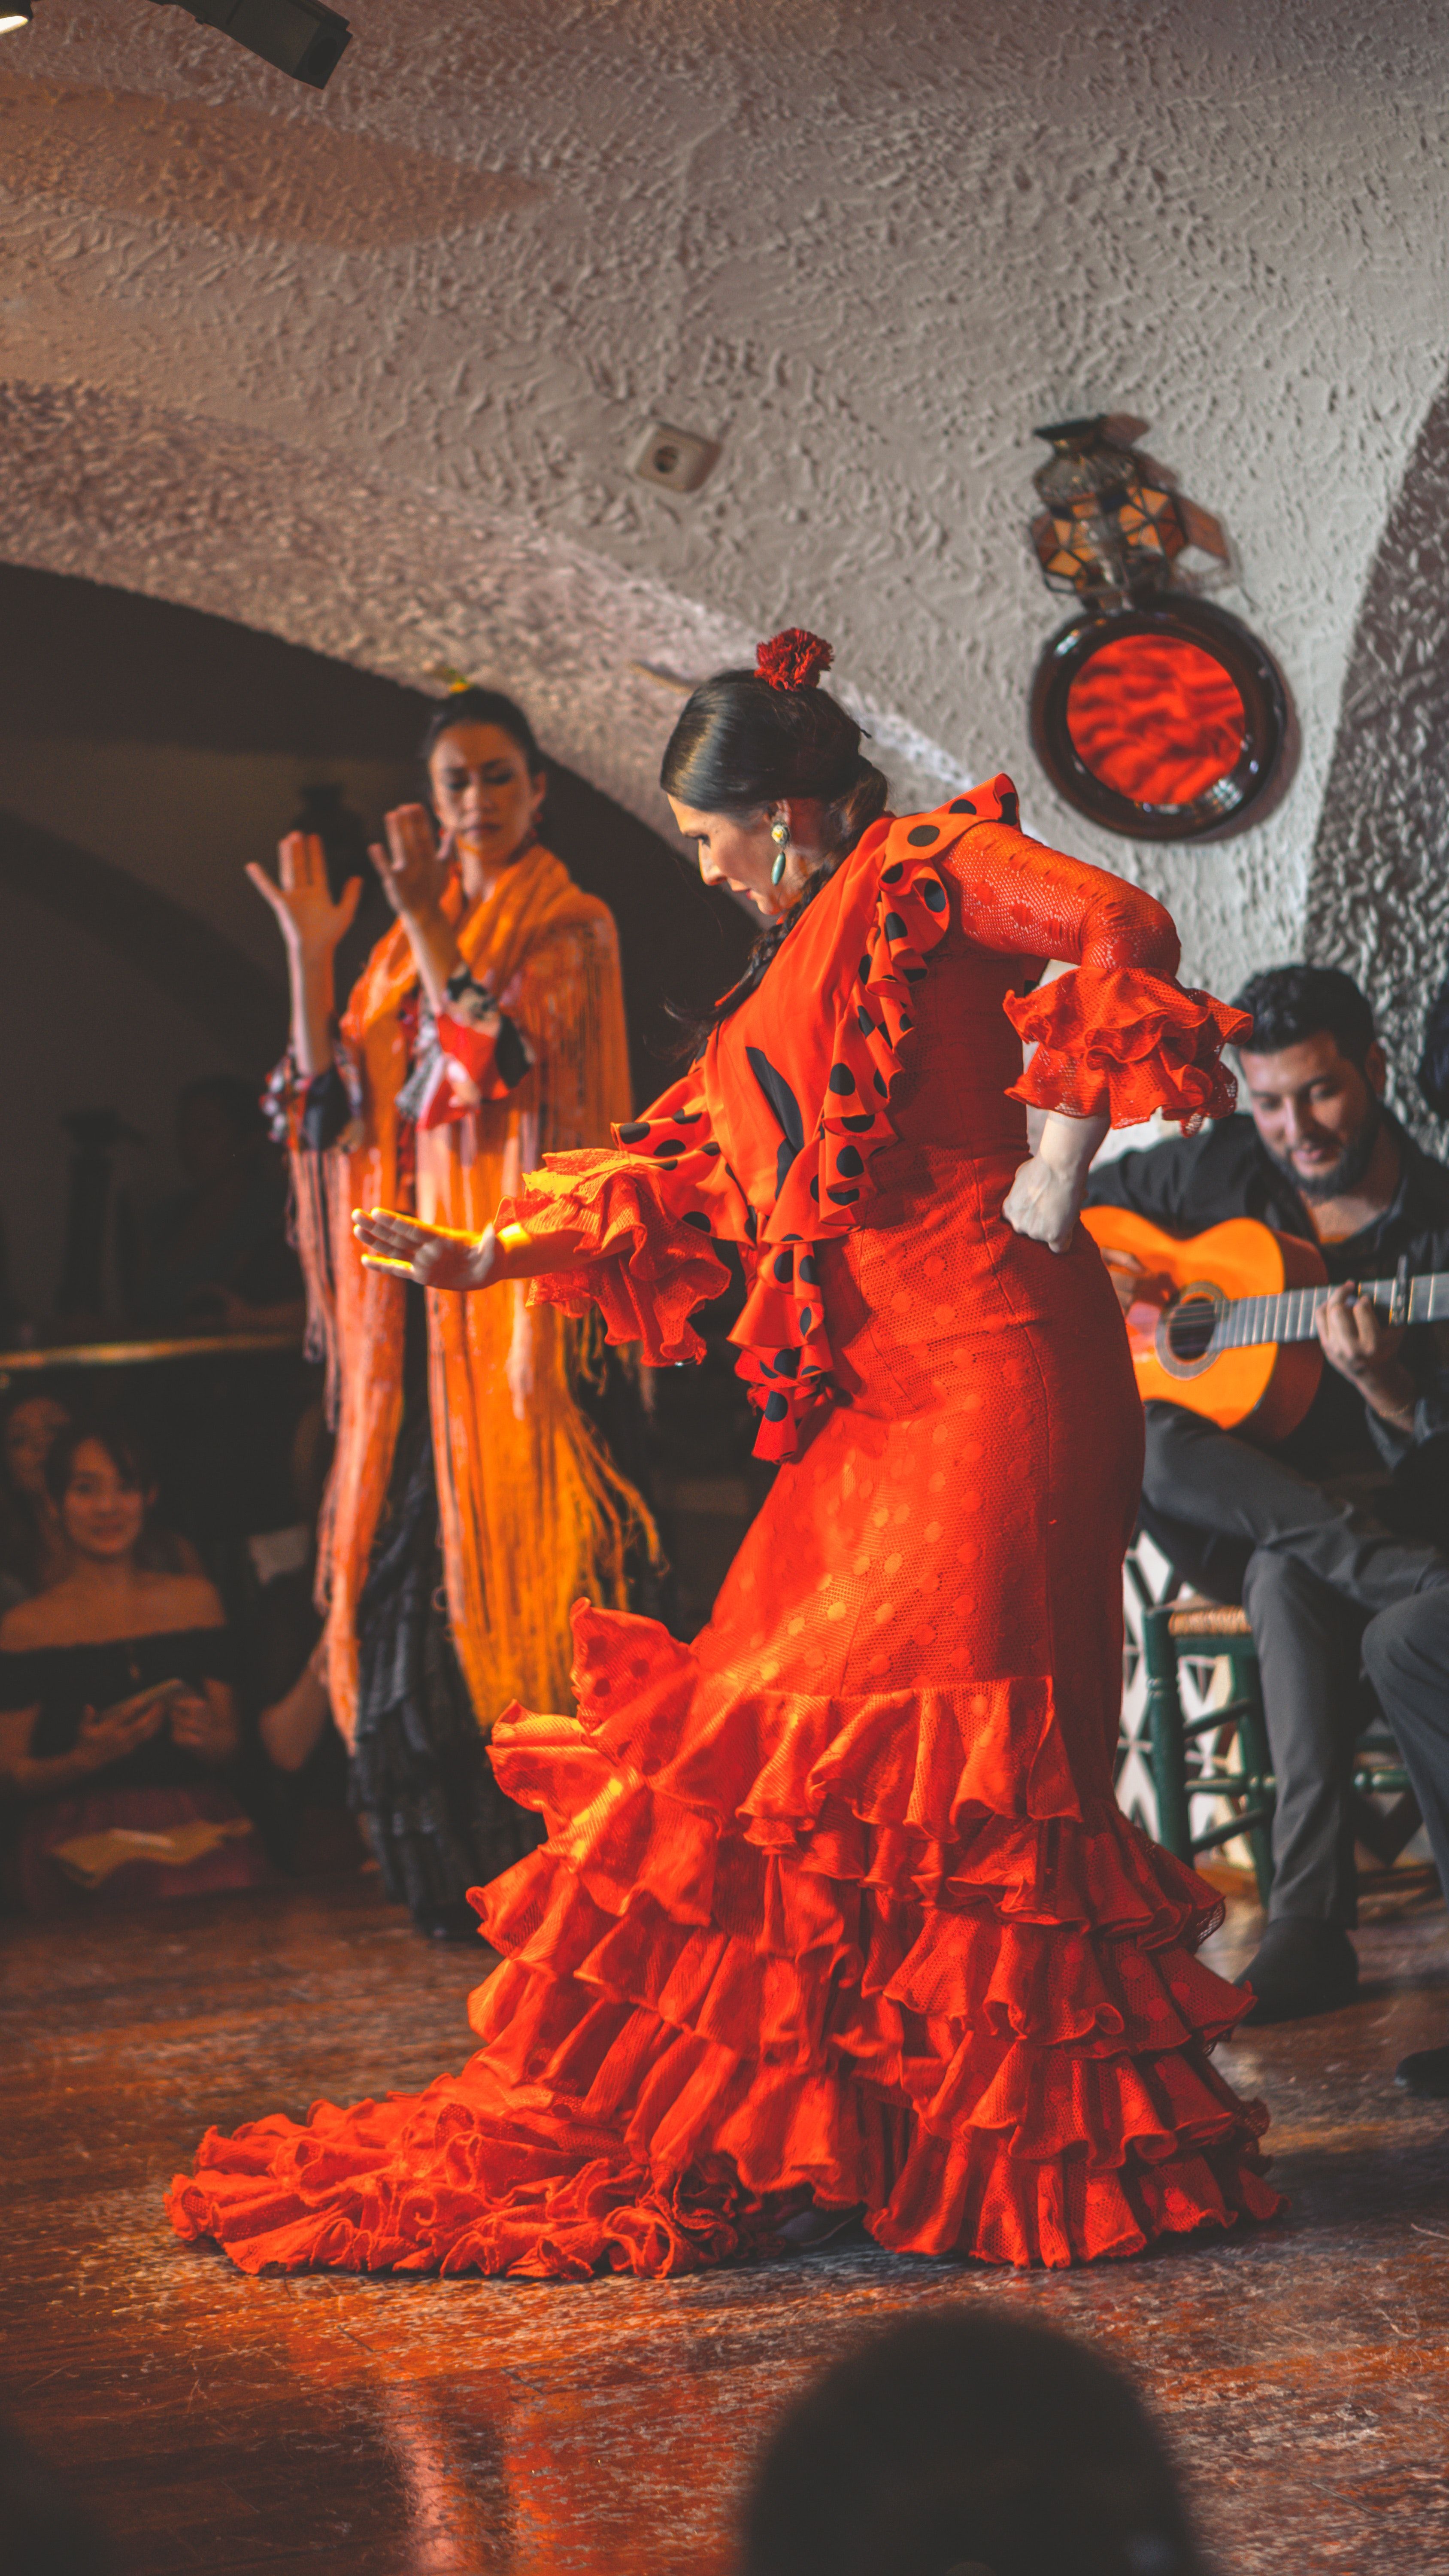 Foto gratis de barcelona, bailarina, flamenco